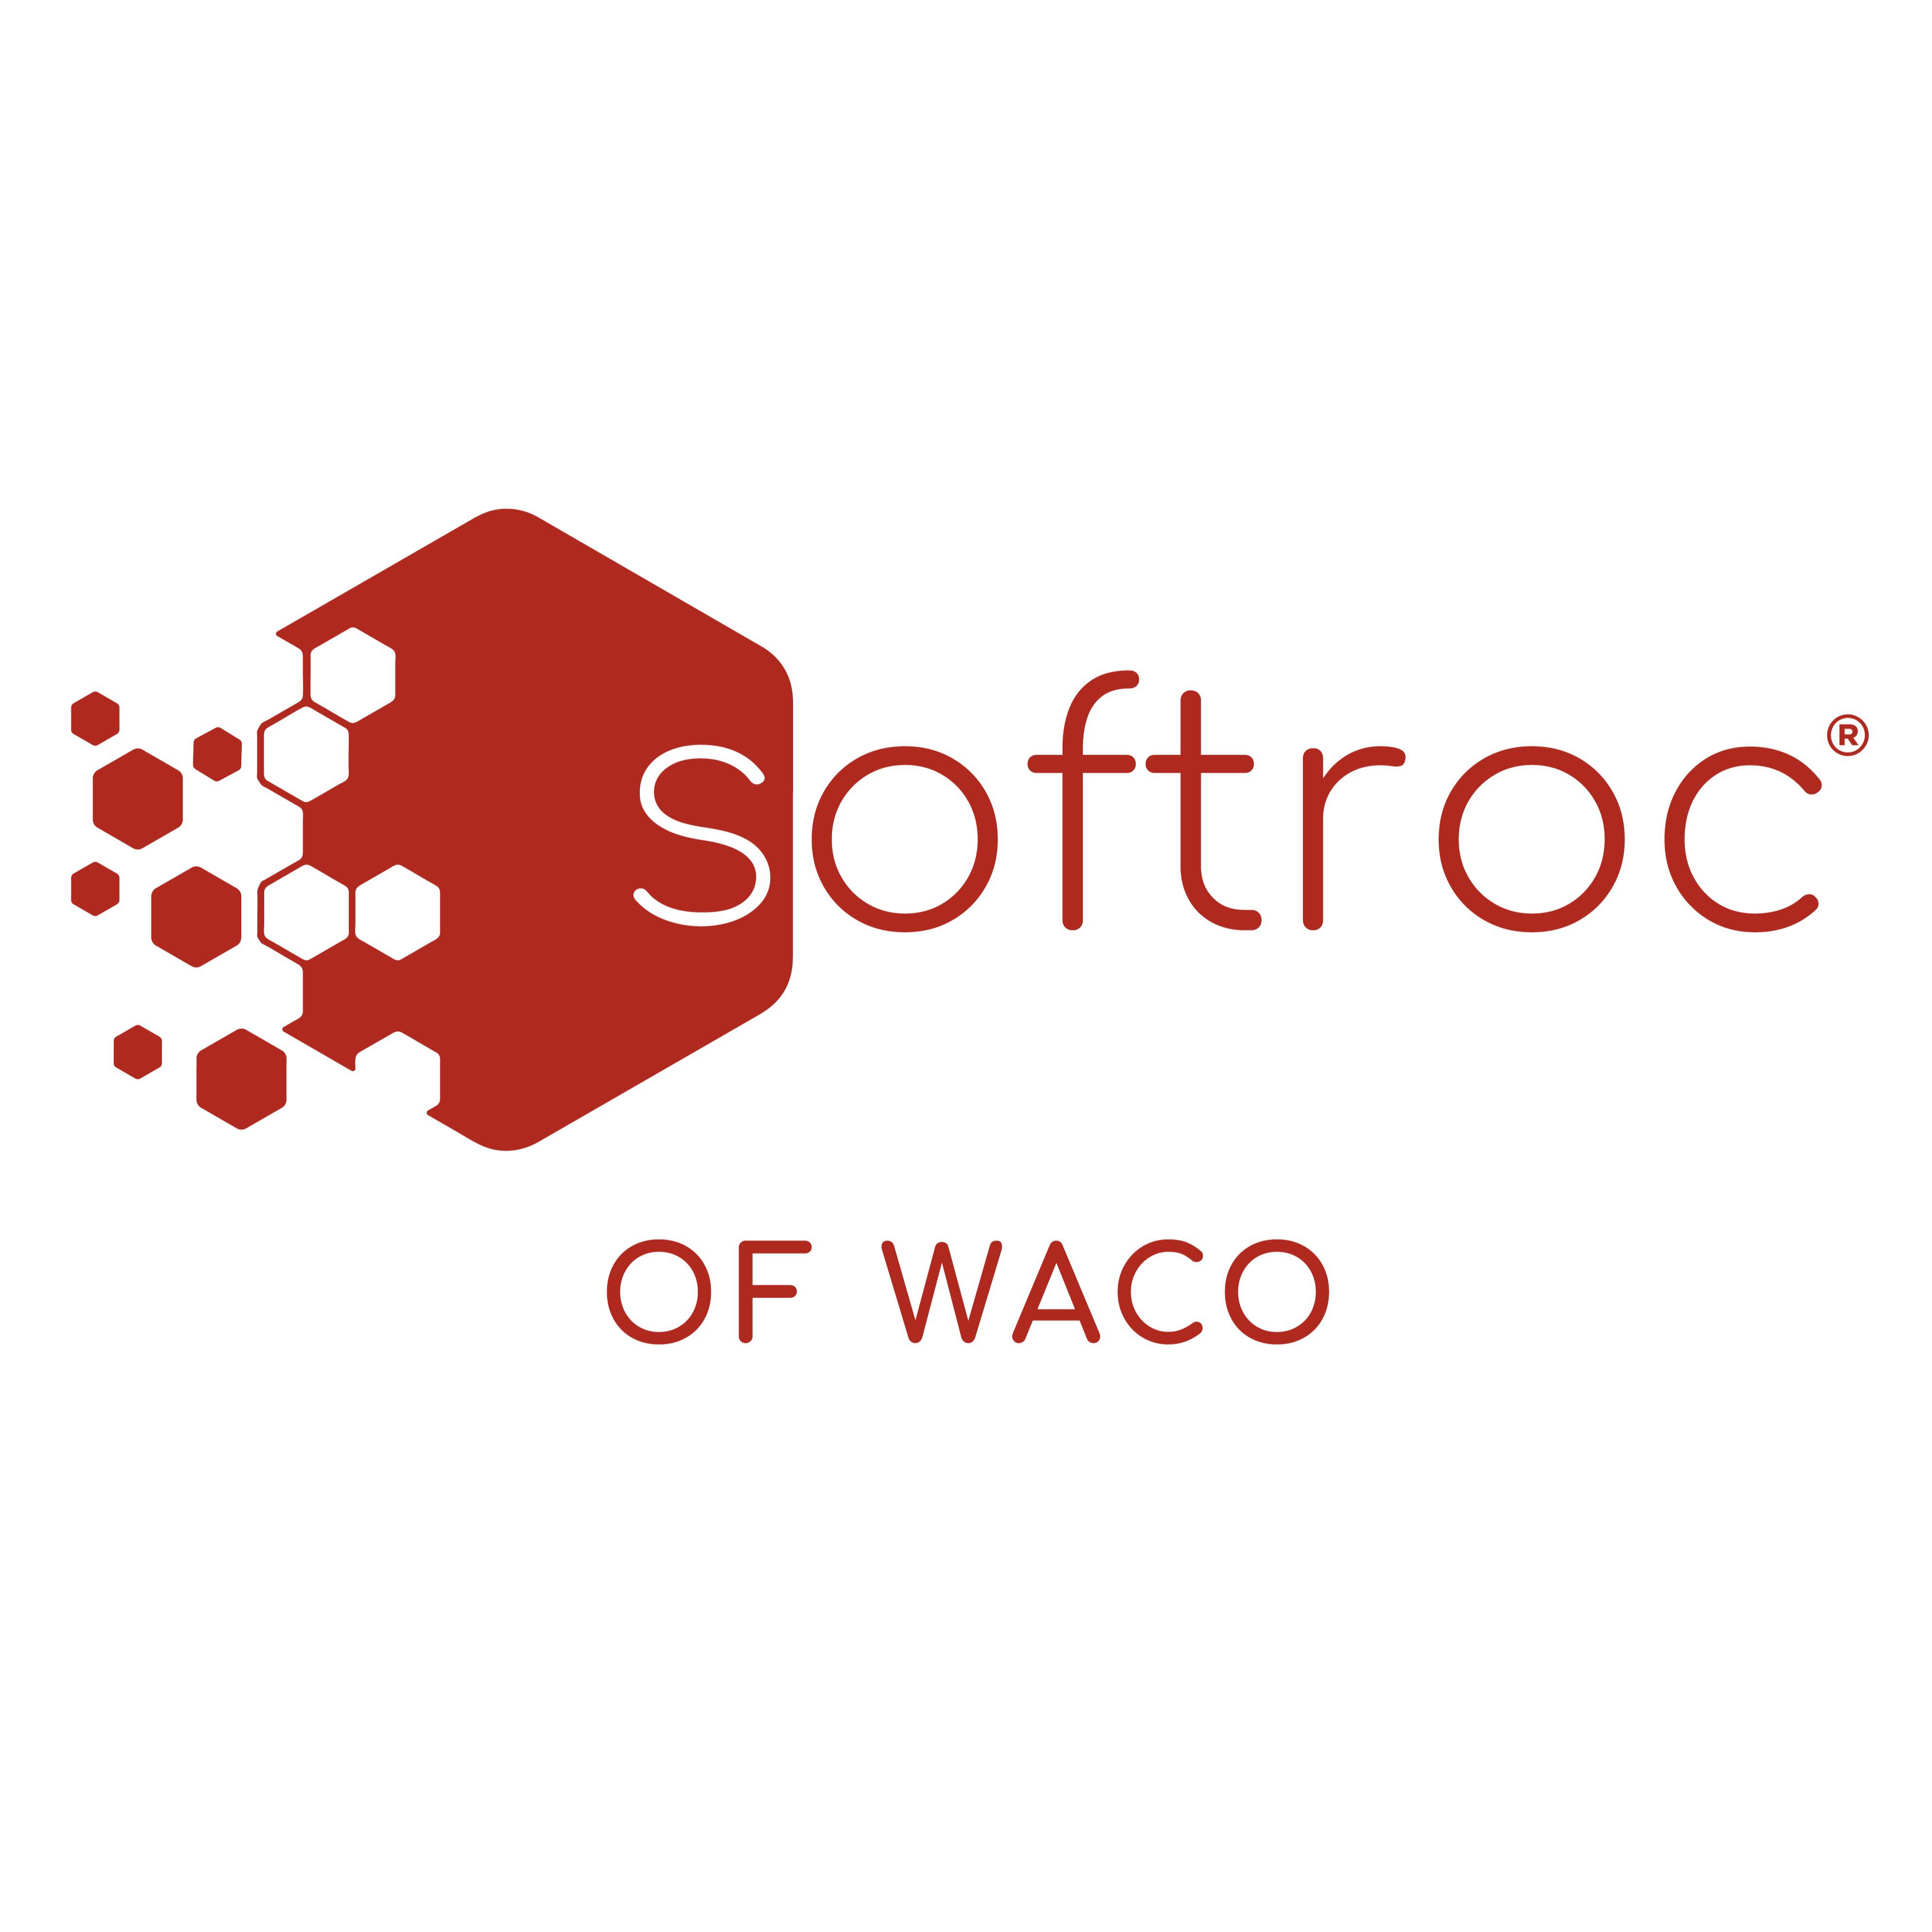 Softroc of Waco